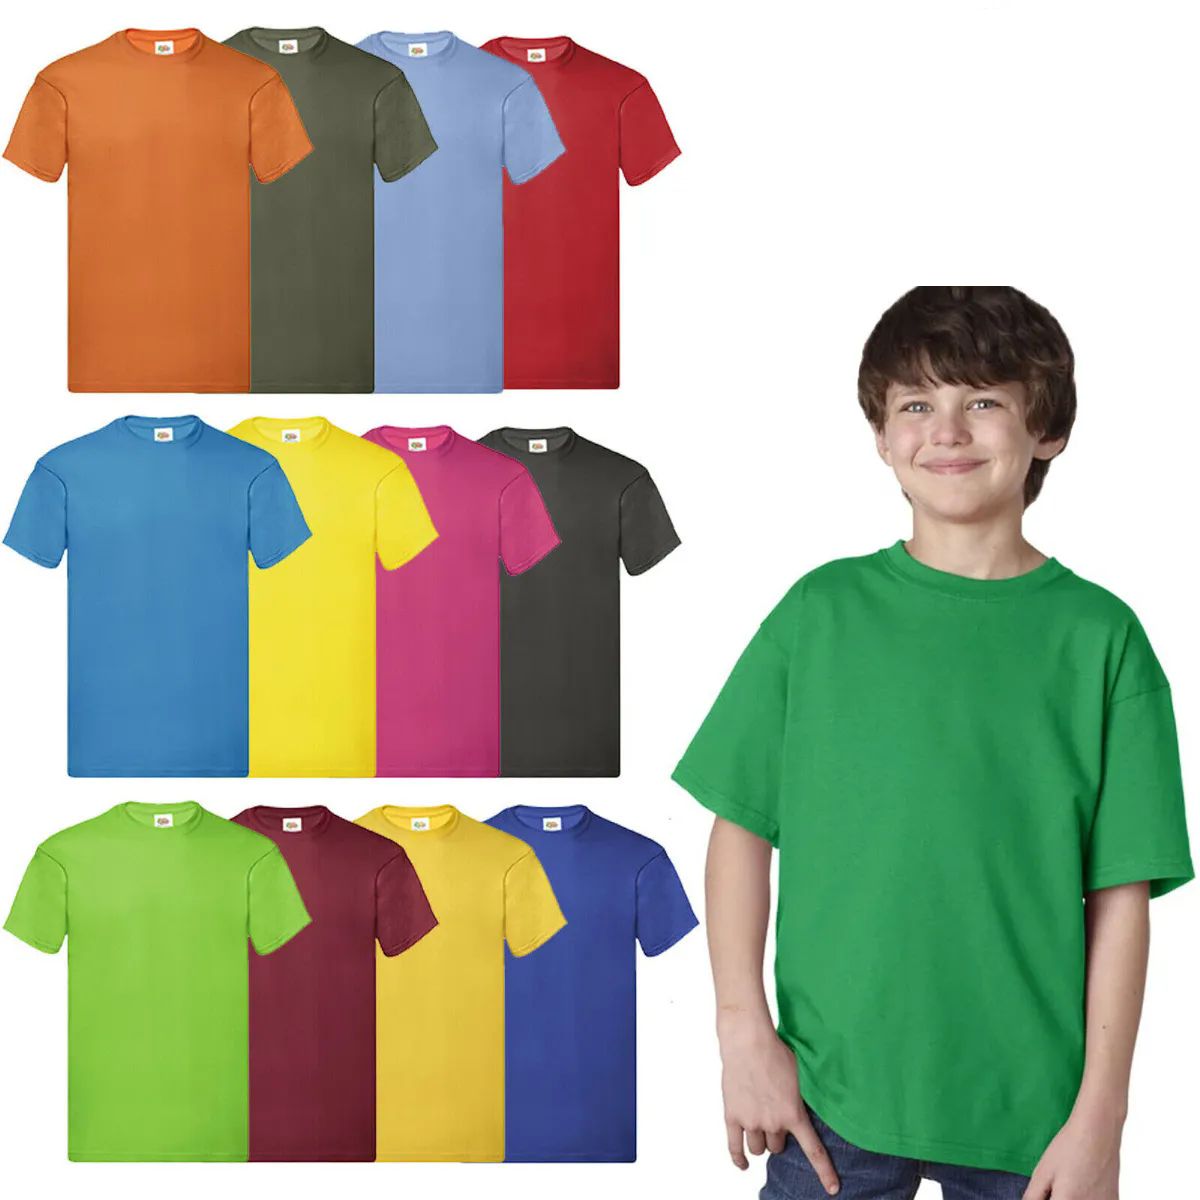 360 Bulk Billion Hats Kids Youth Cotton Assorted Colors T Shirts Size XL